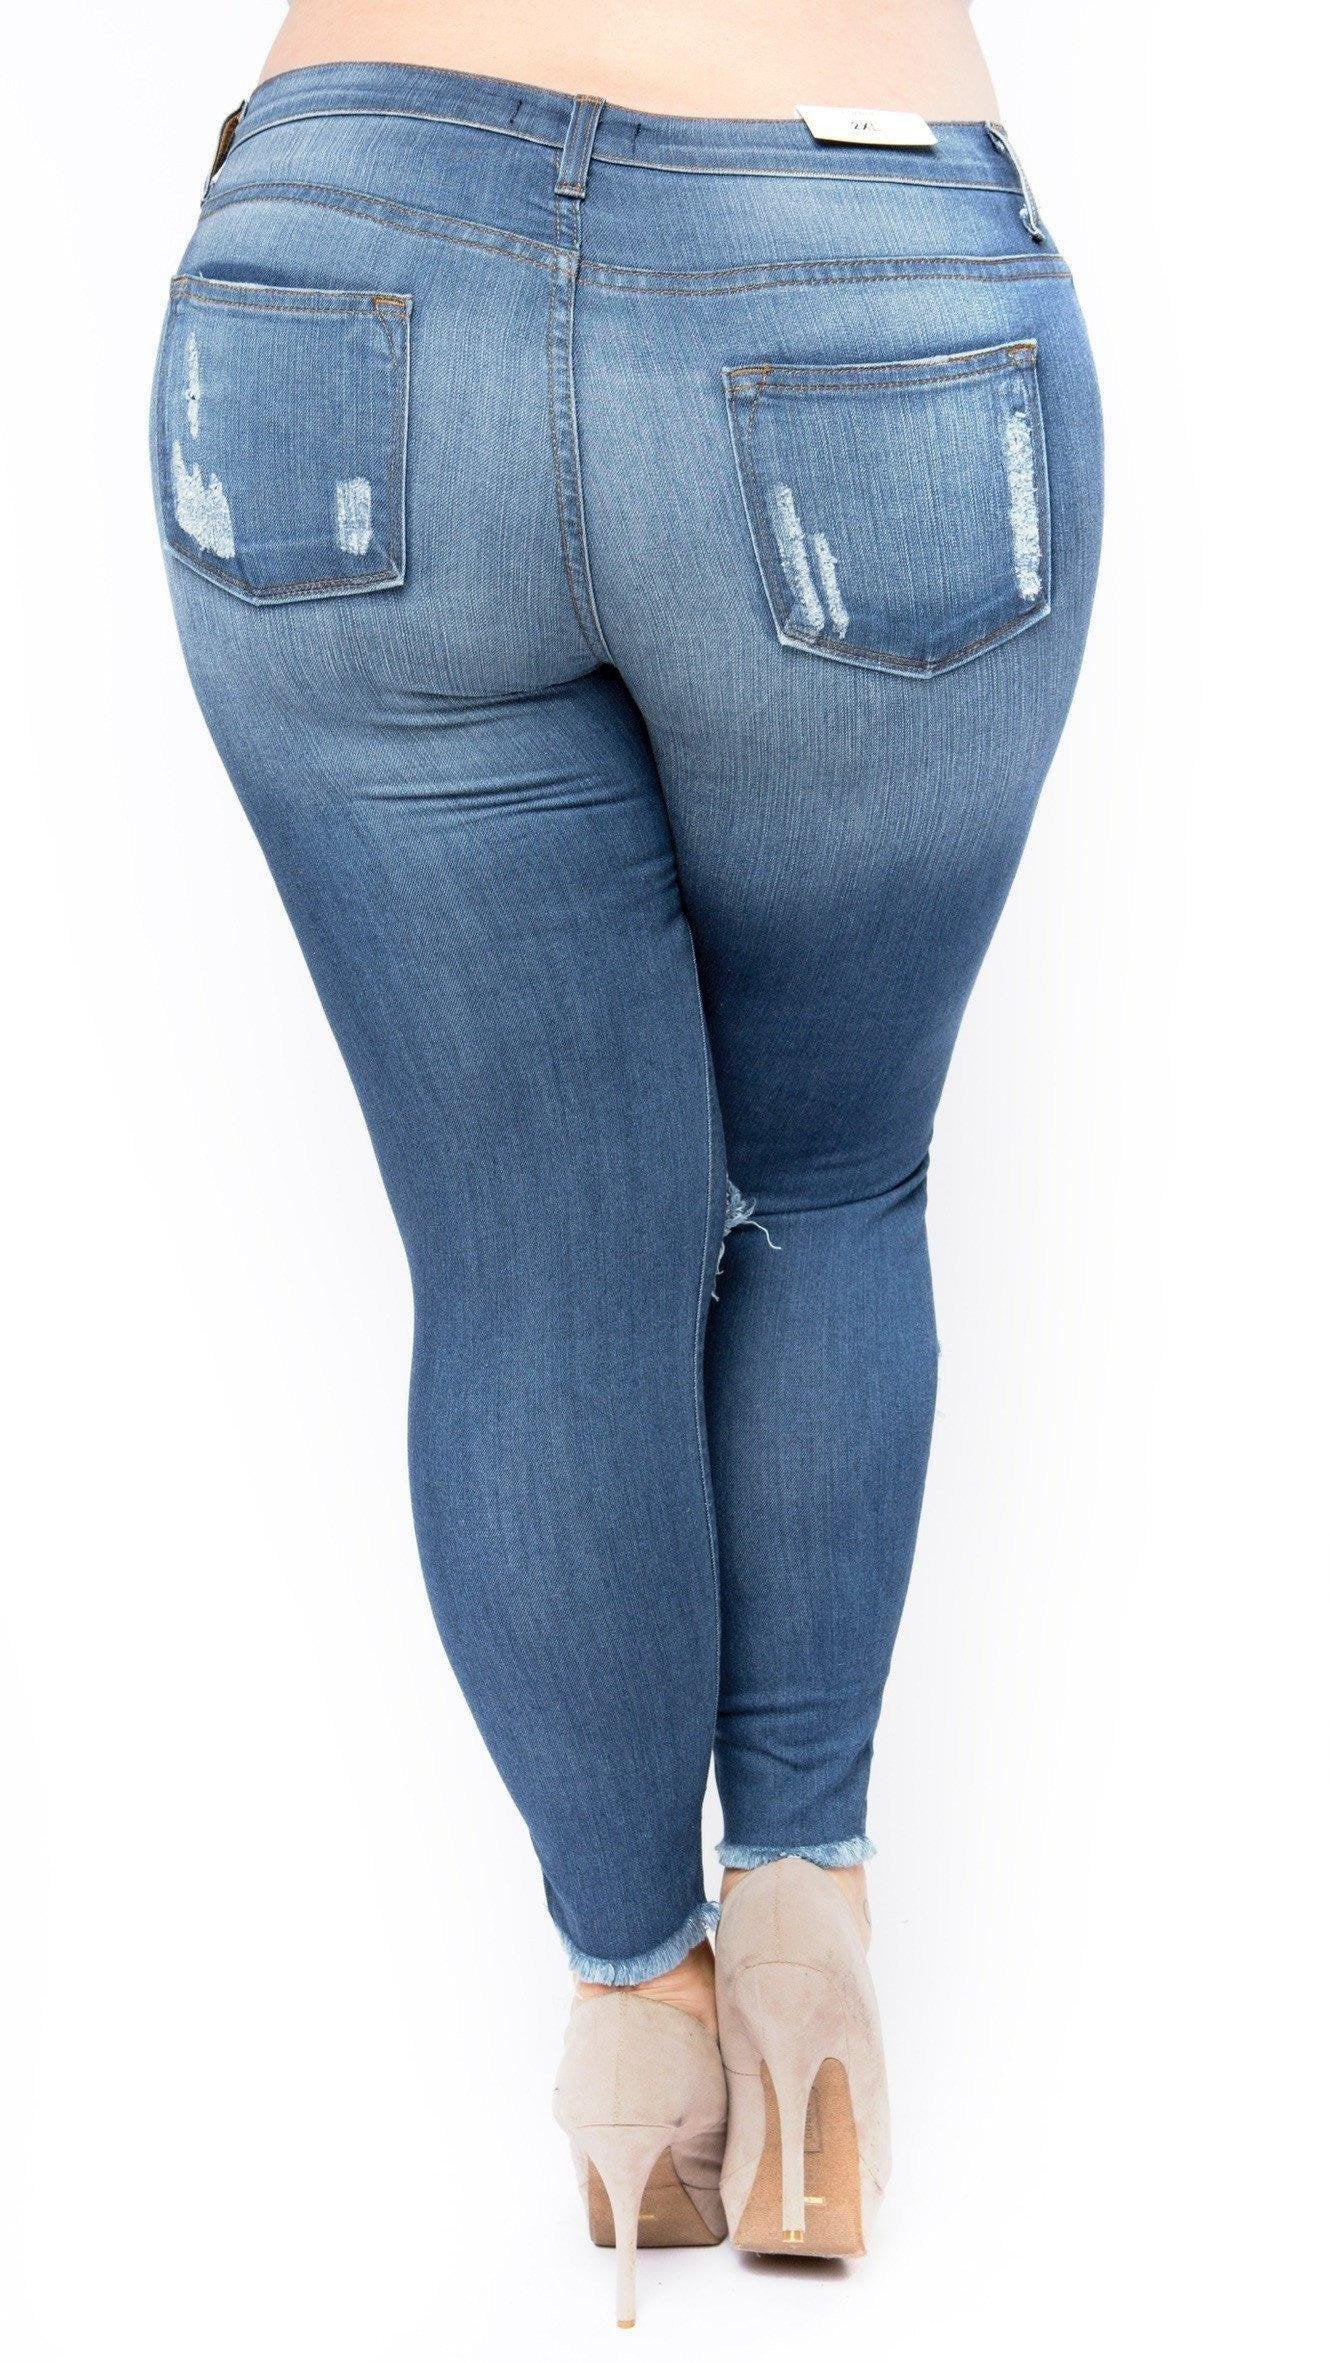 Ruff Stuff Extreme Distressed Denim Jeans (Dark Blue)